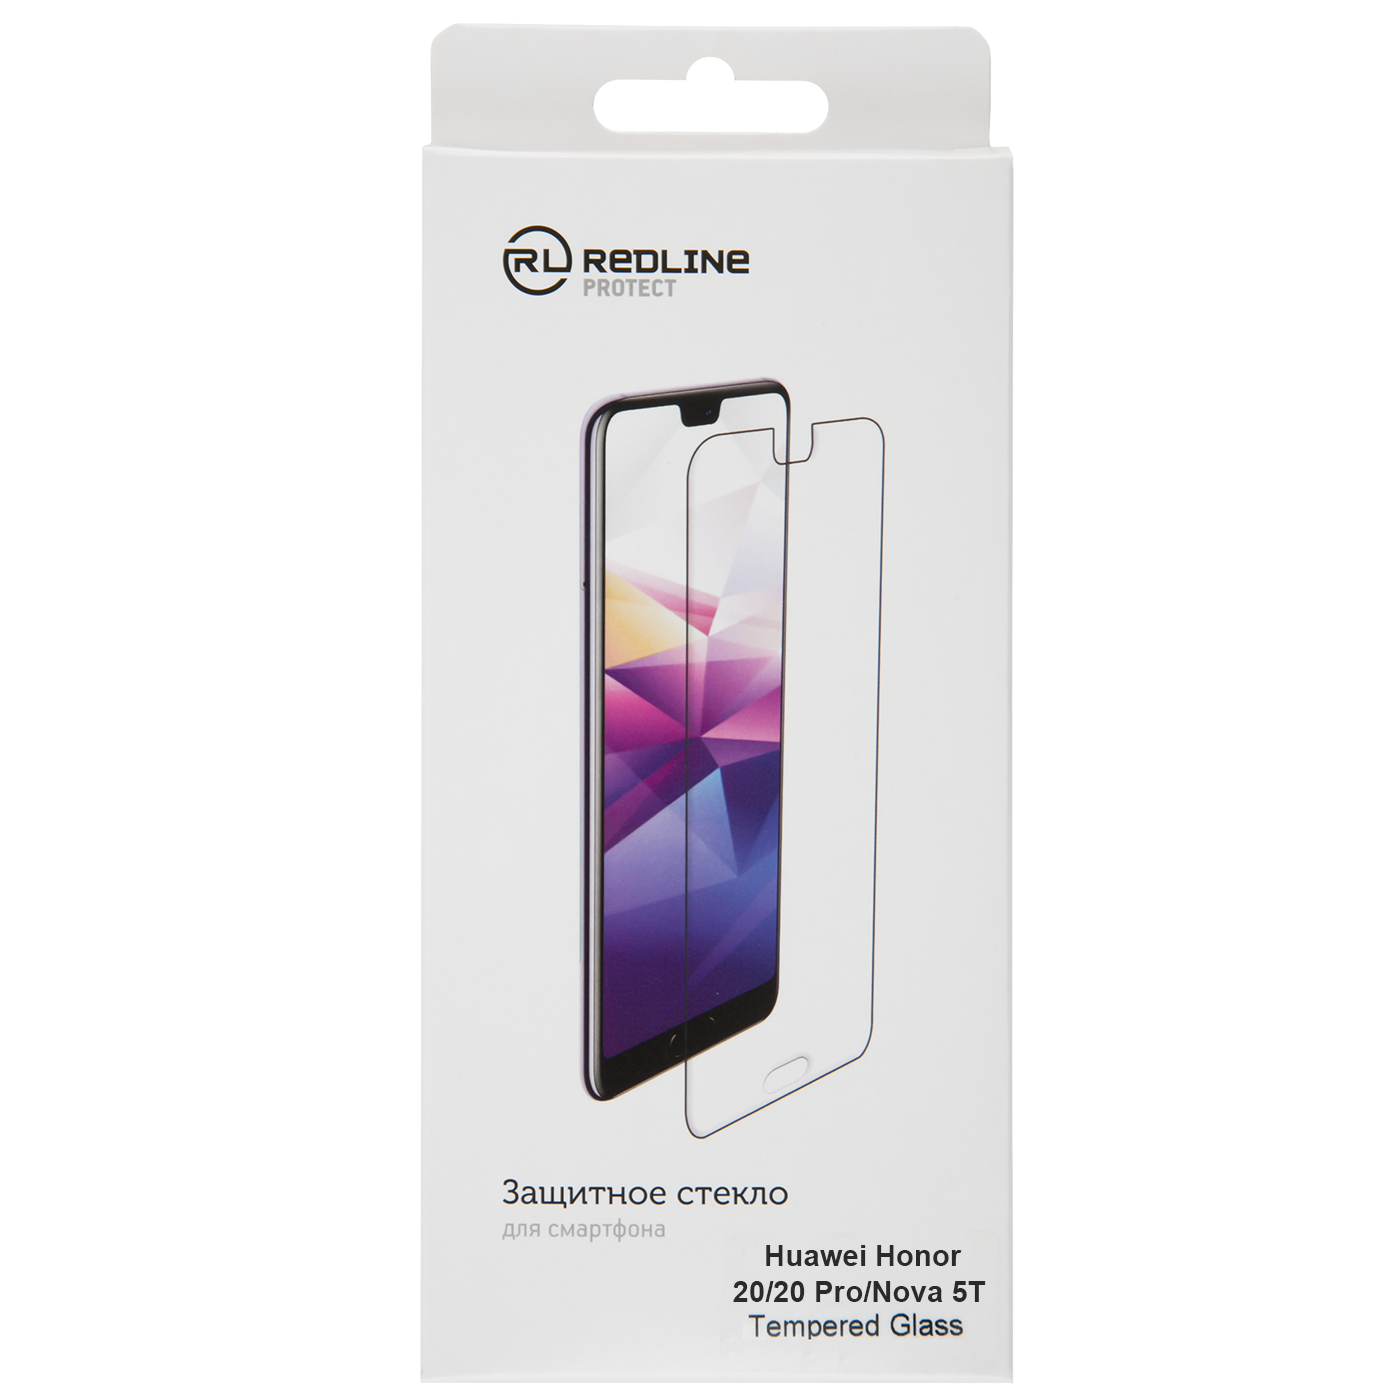 Защитный экран Huawei Honor 20/20 Pro/Nova 5T tempered glass